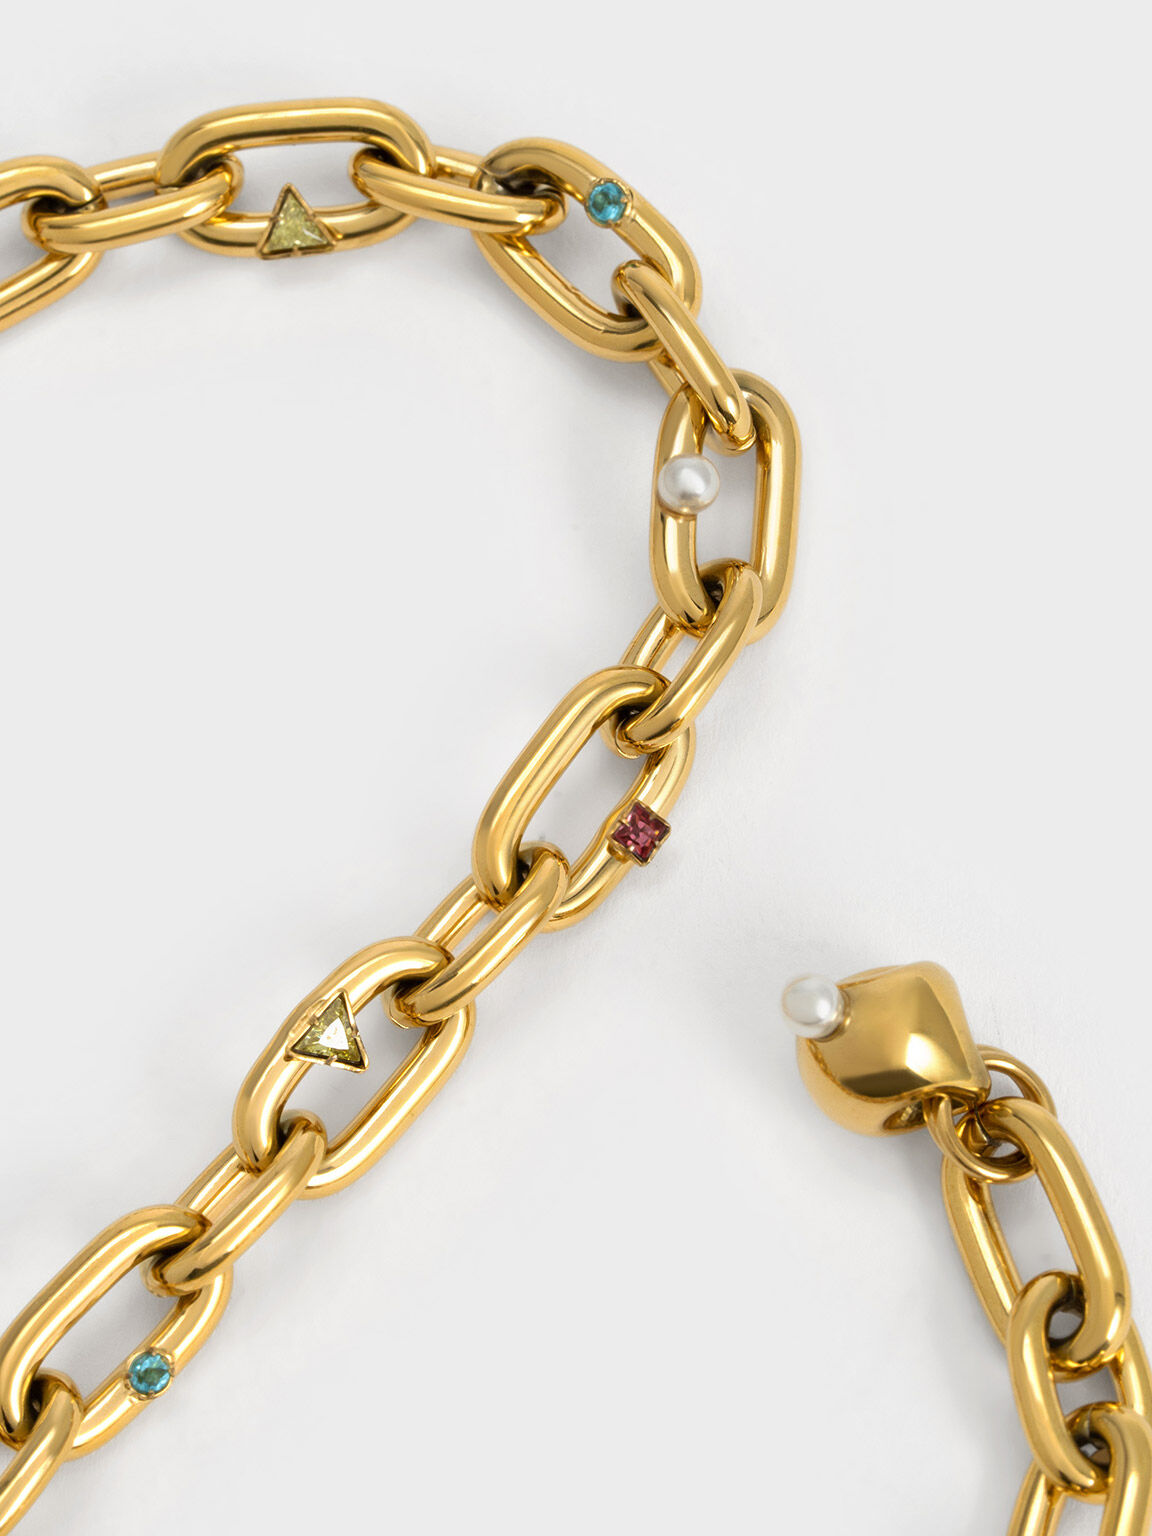 Crystal-Embellished Chain-Link Necklace, Turquoise, hi-res